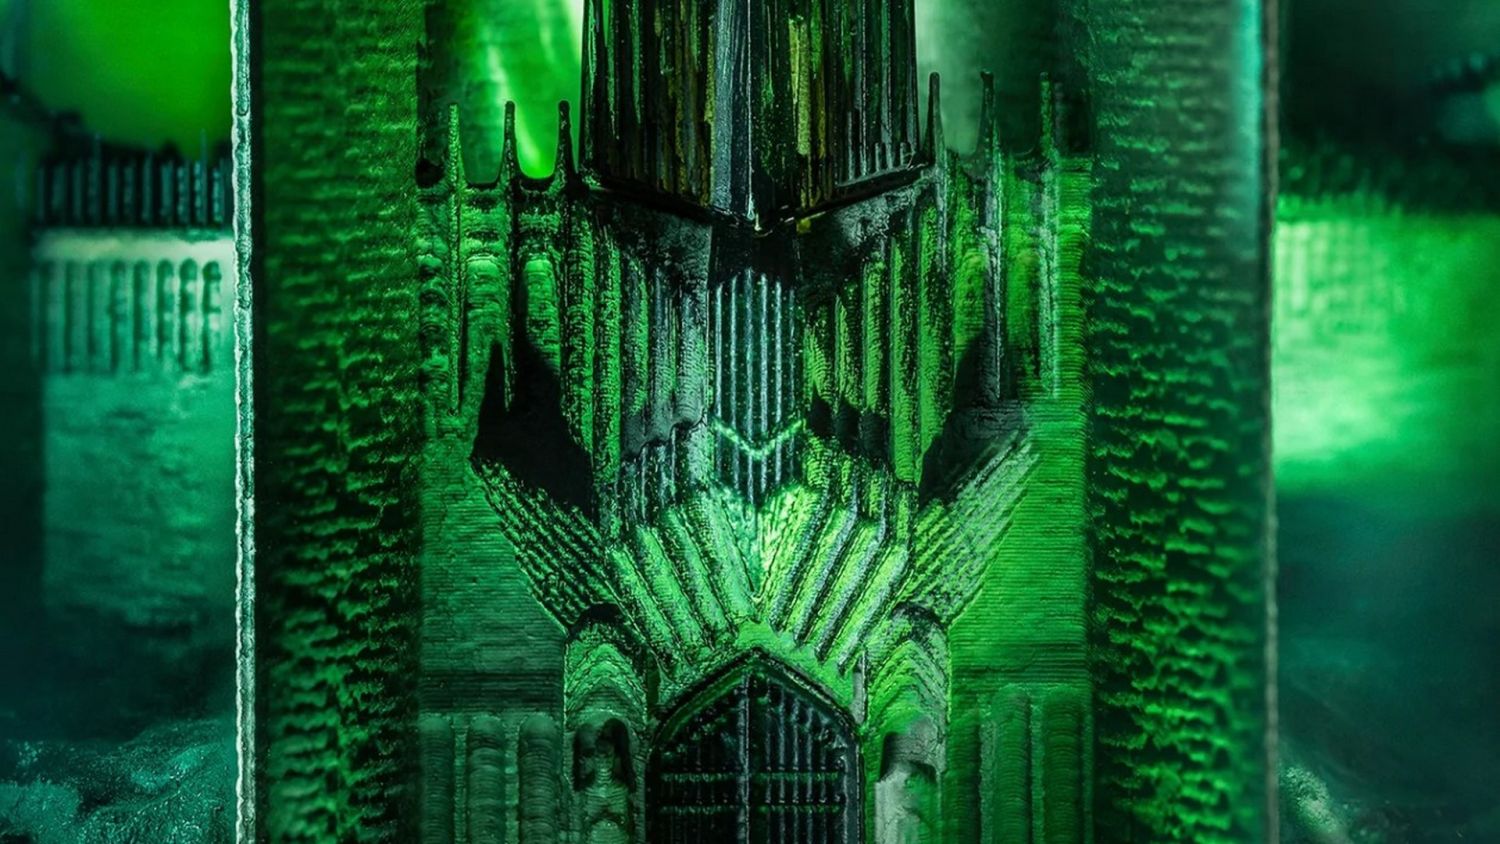 Tower of Sorcery at Minas Morgul